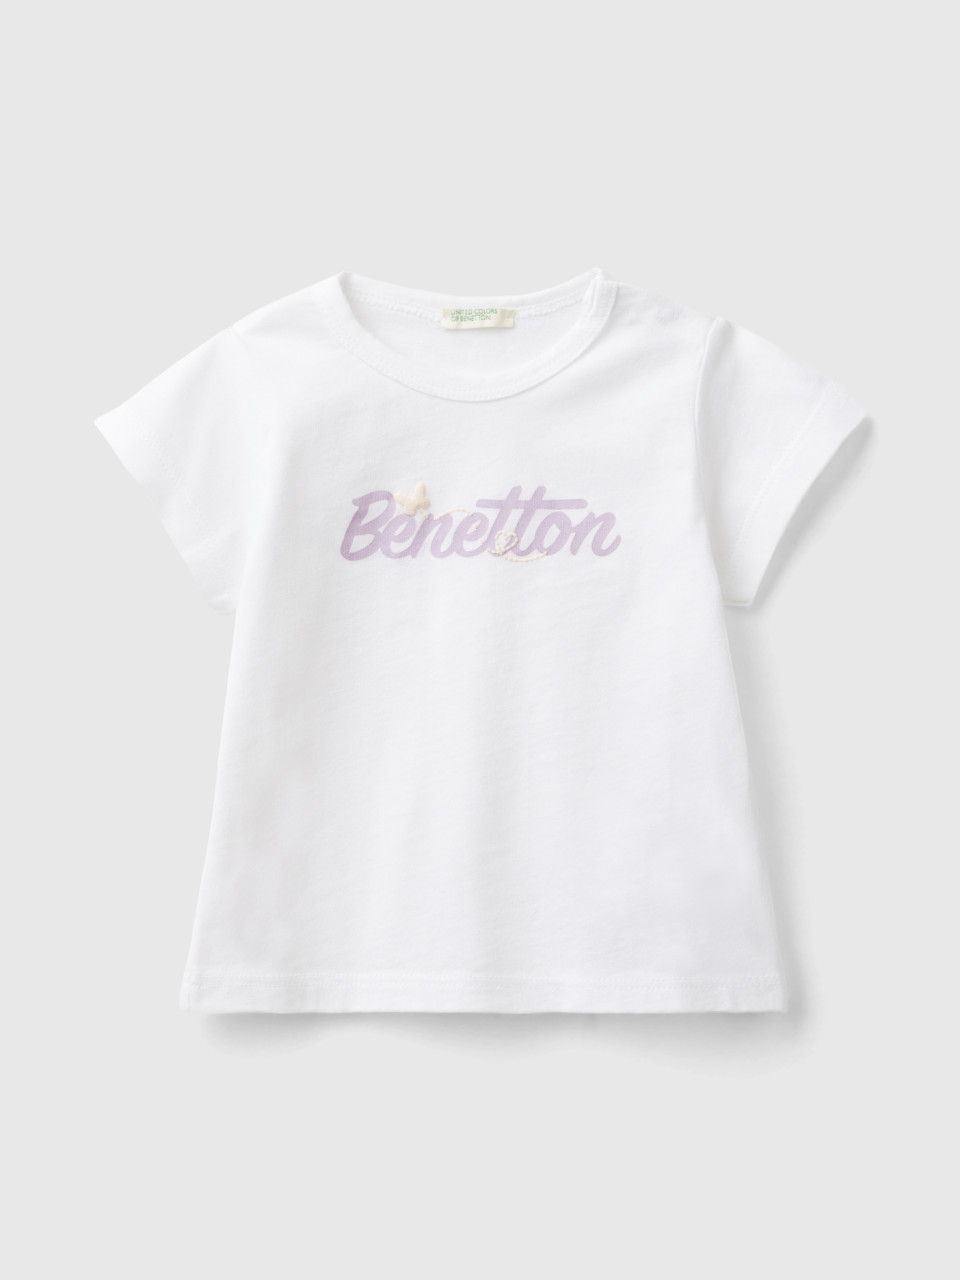 Benetton, Organic Cotton T-shirt, White, Kids